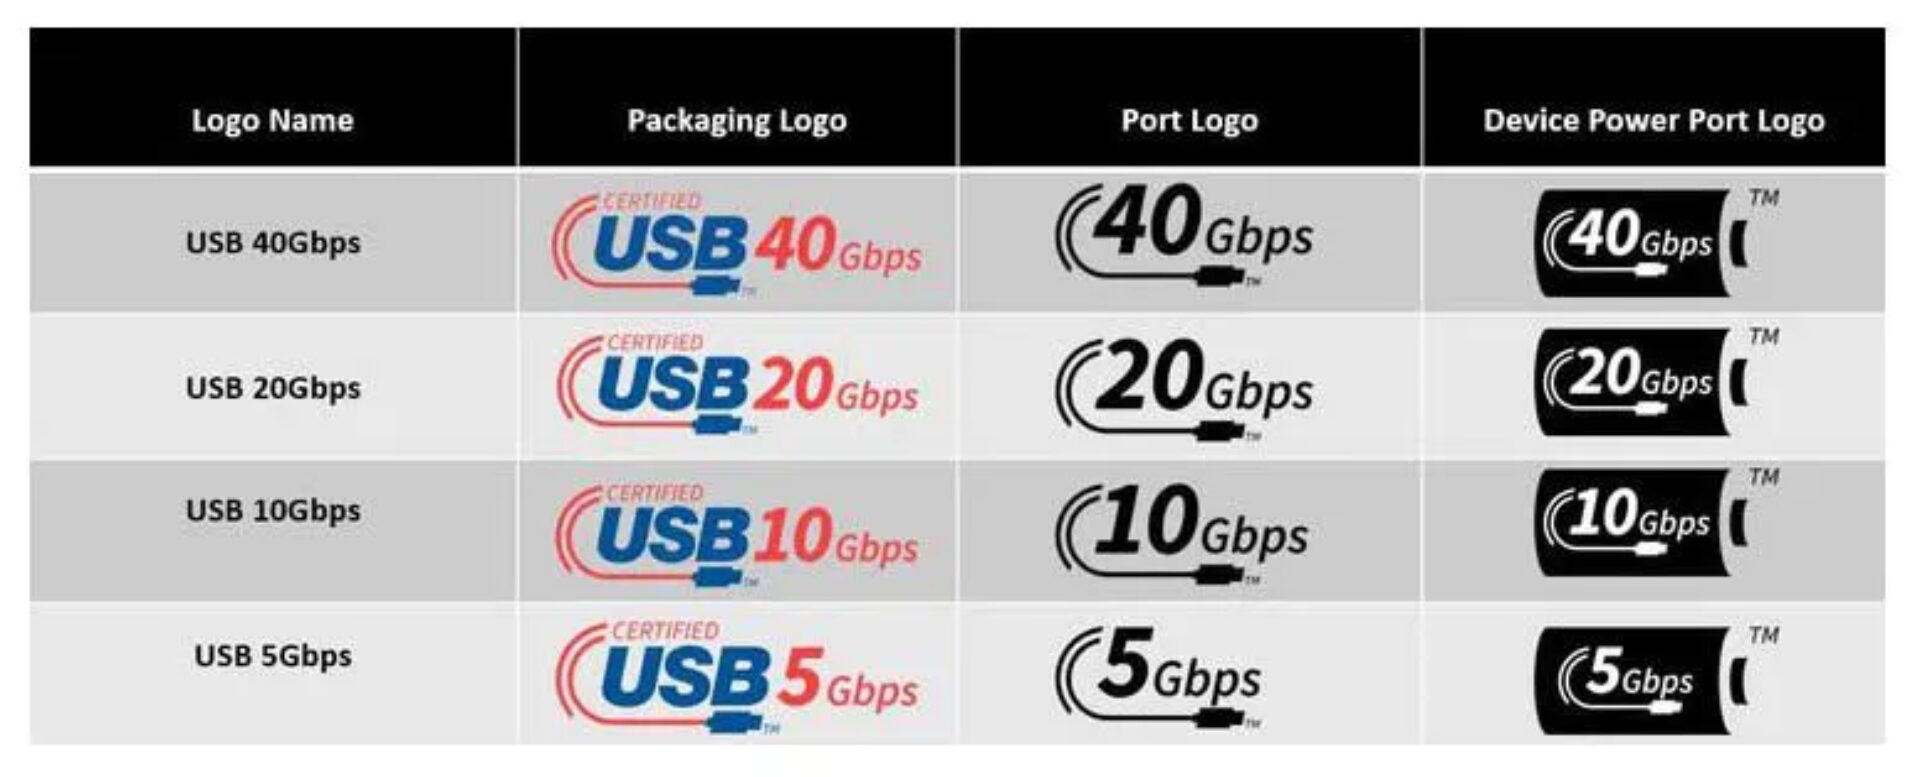 USB Performance Logos